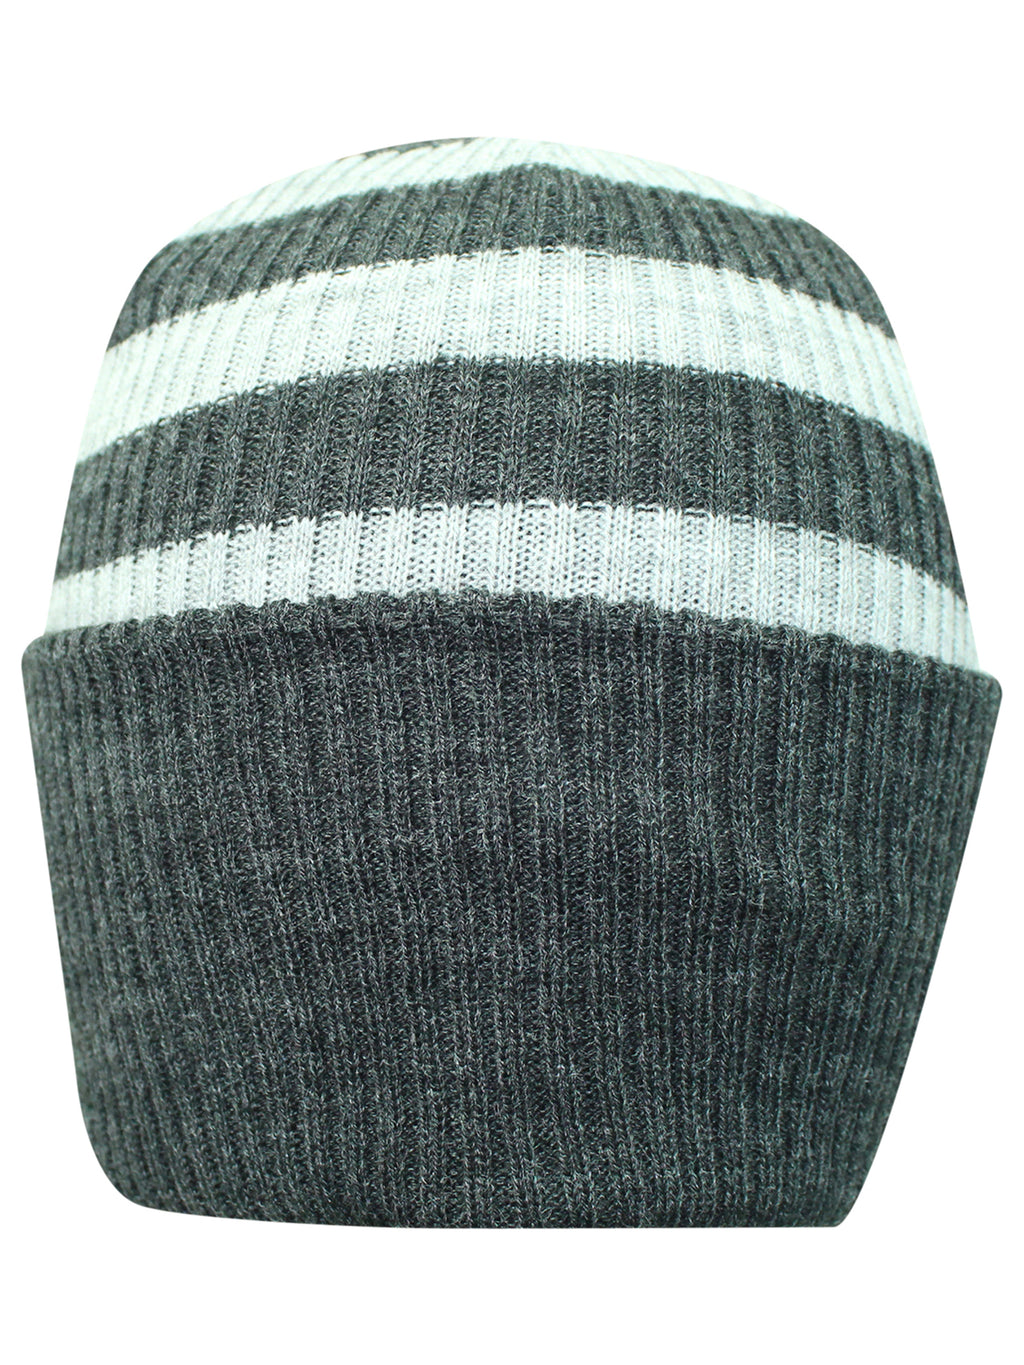 Light Gray Striped Mega Knit Slouchy Beanie Hat Cap